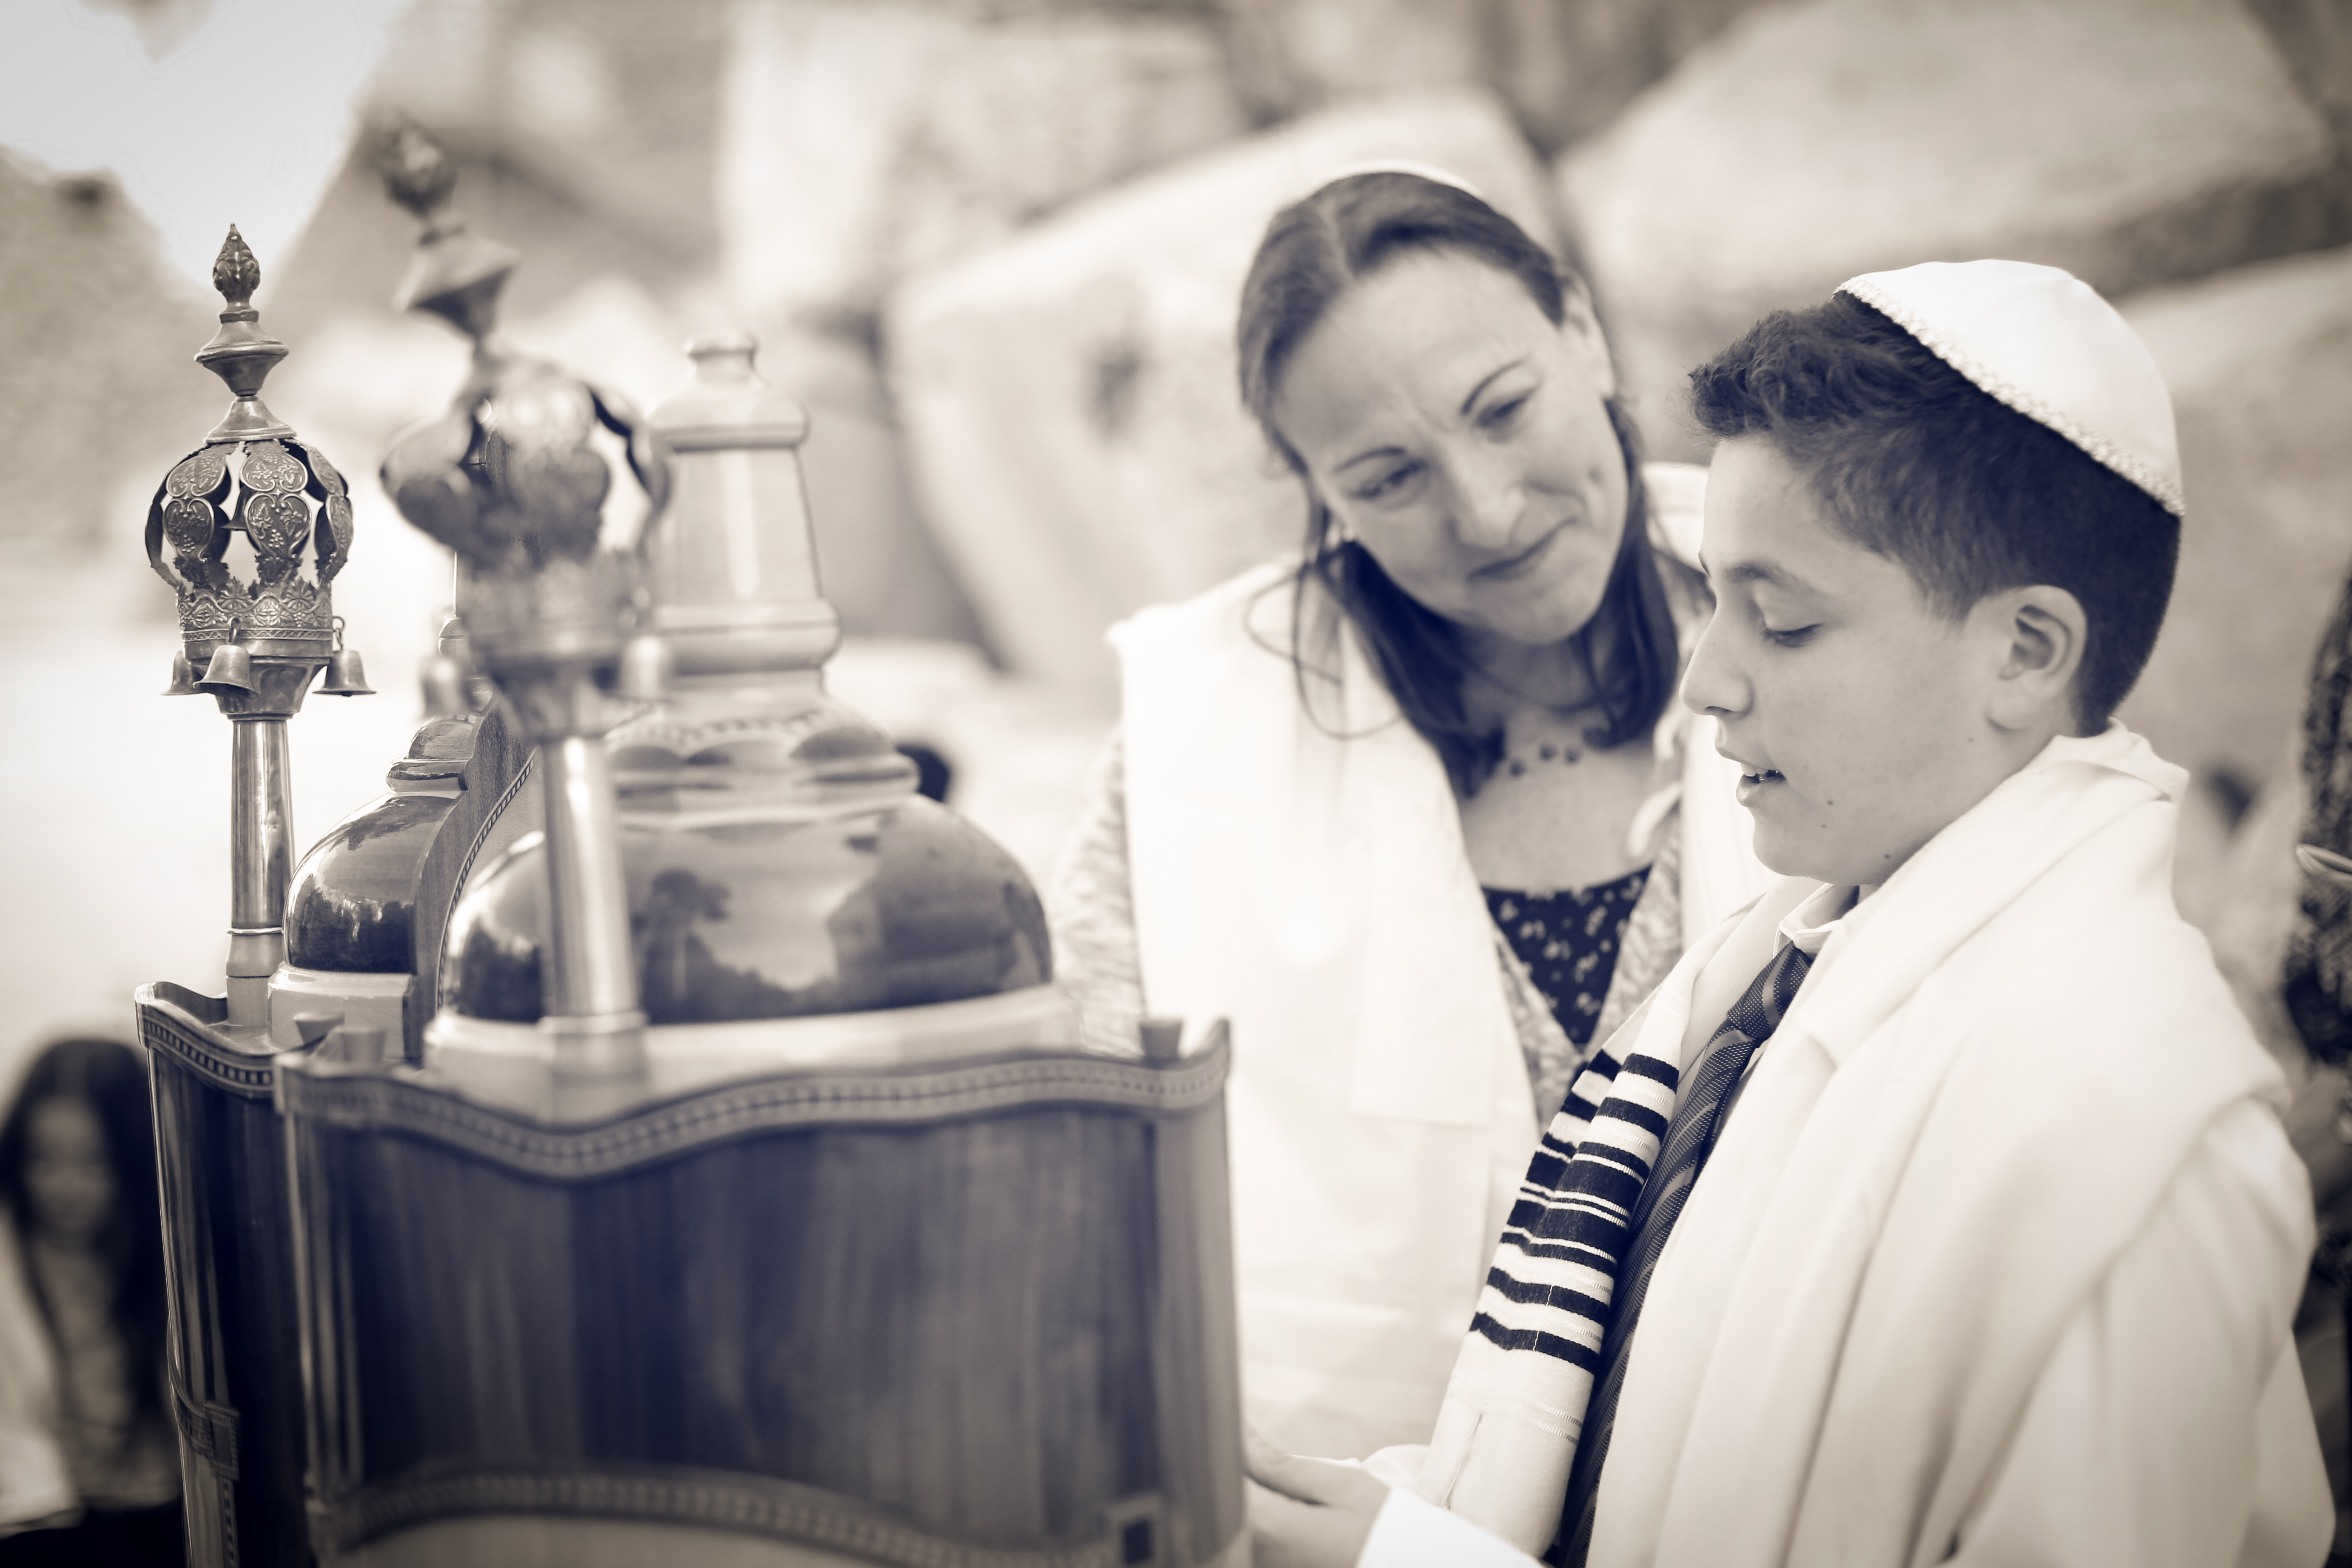 Rabbi Rosalind Glazer, Yonatan's Bar Mitzvah